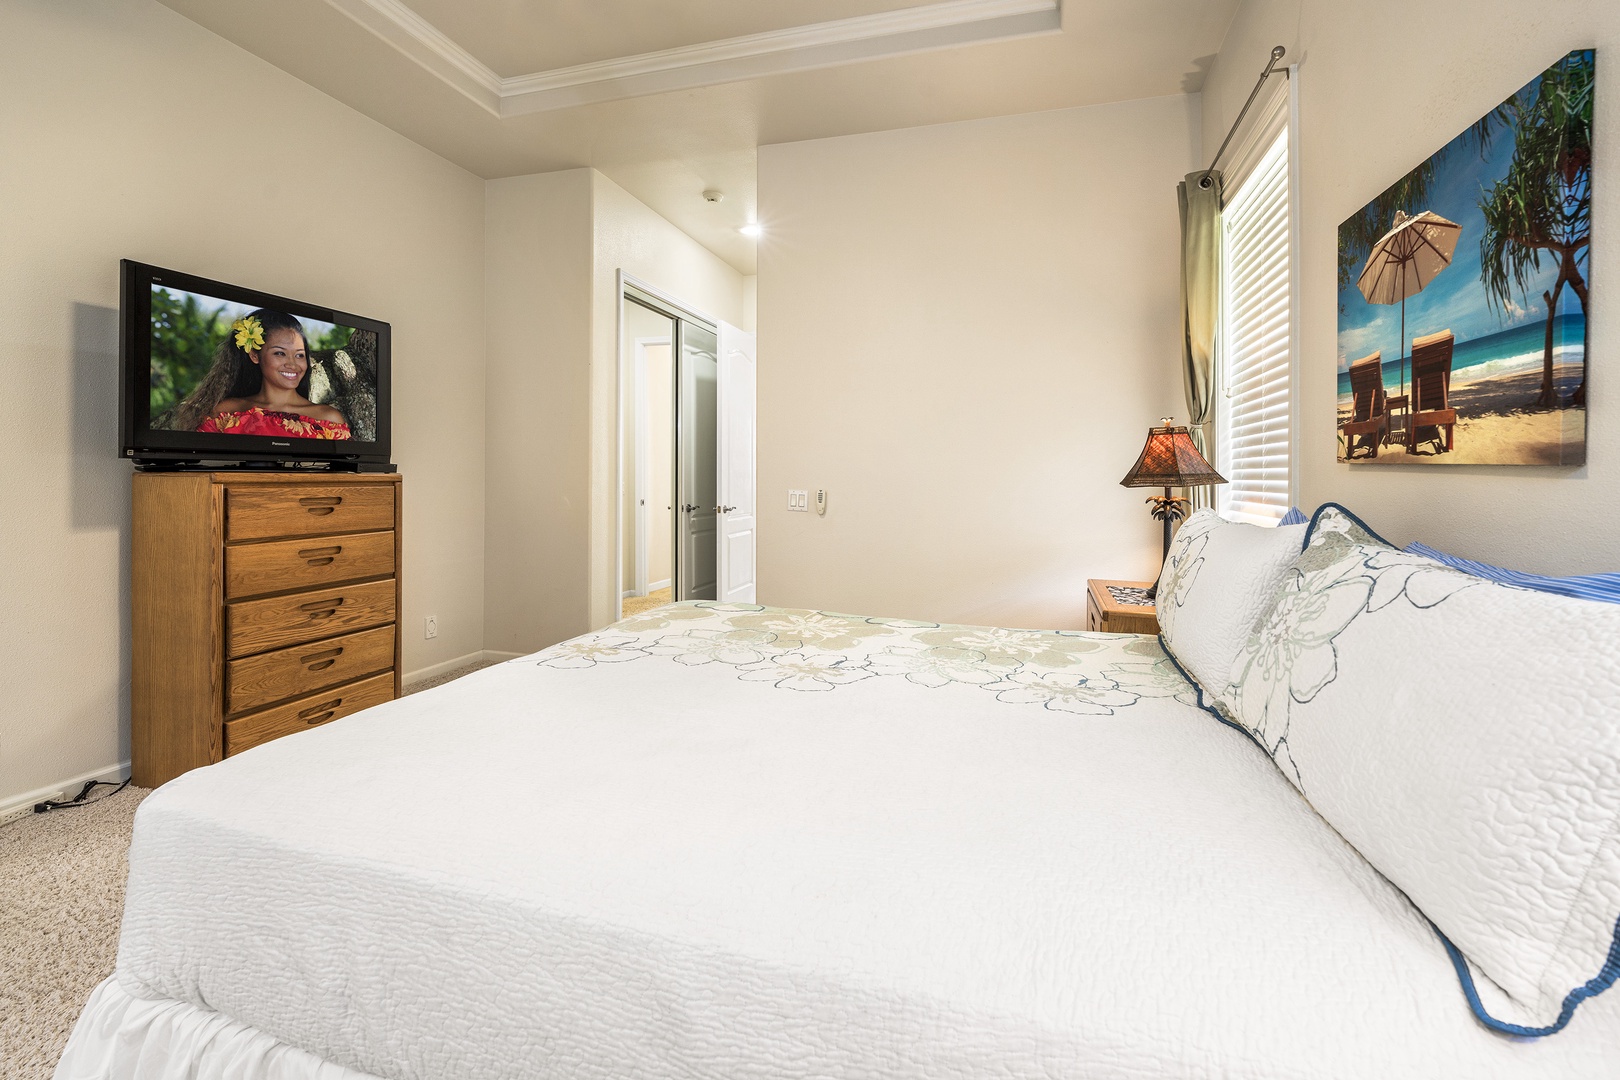 Kailua Kona Vacation Rentals, Piko Nani - Equipped with King bed and TV